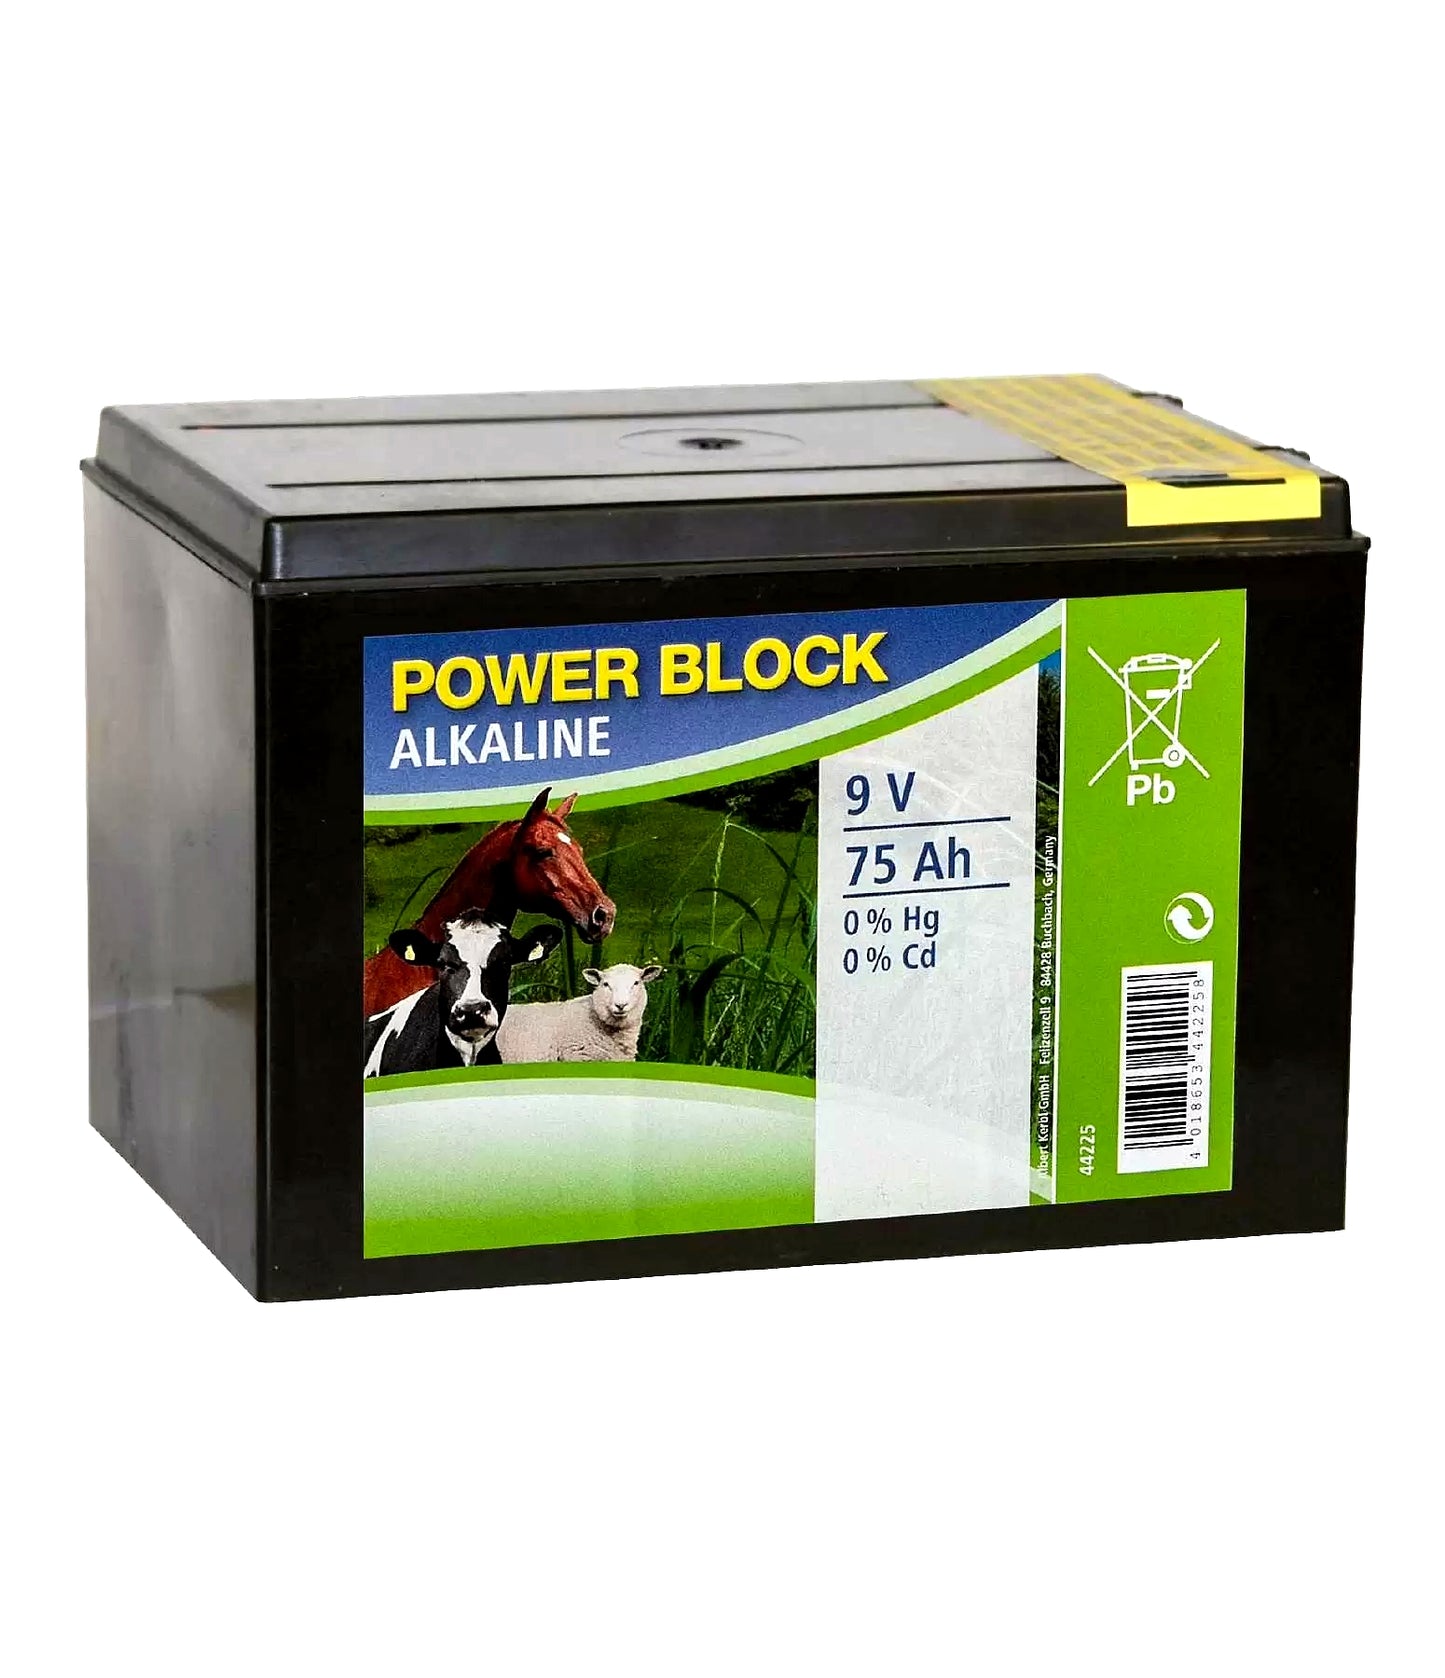 Corral - Power Block Energiser Battery (9 volt, 75Ah, alkaline Battery)